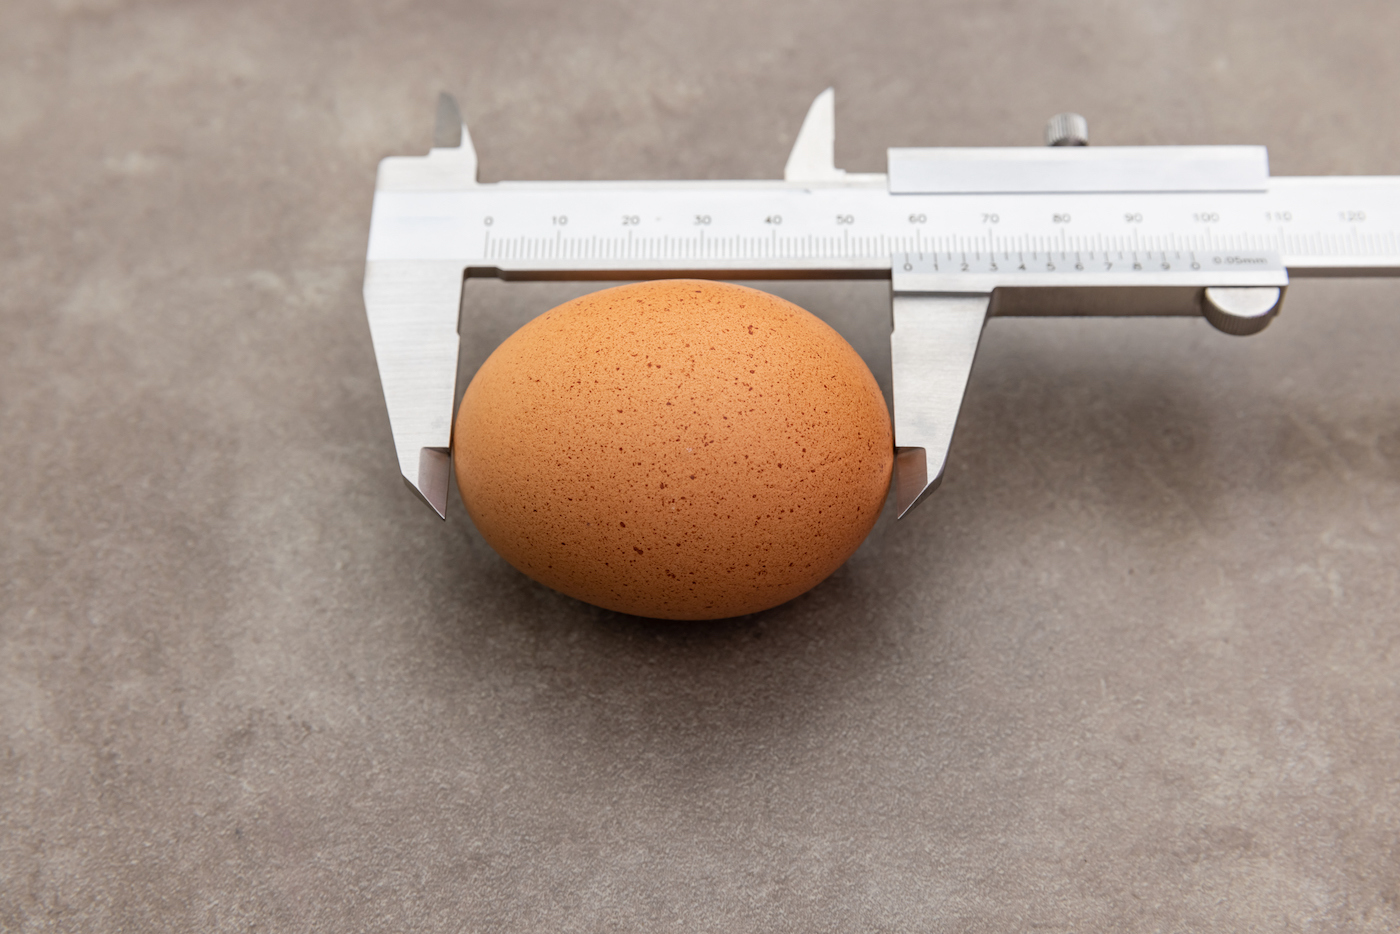 Vernier caliper measure brown egg on rusty grunge background